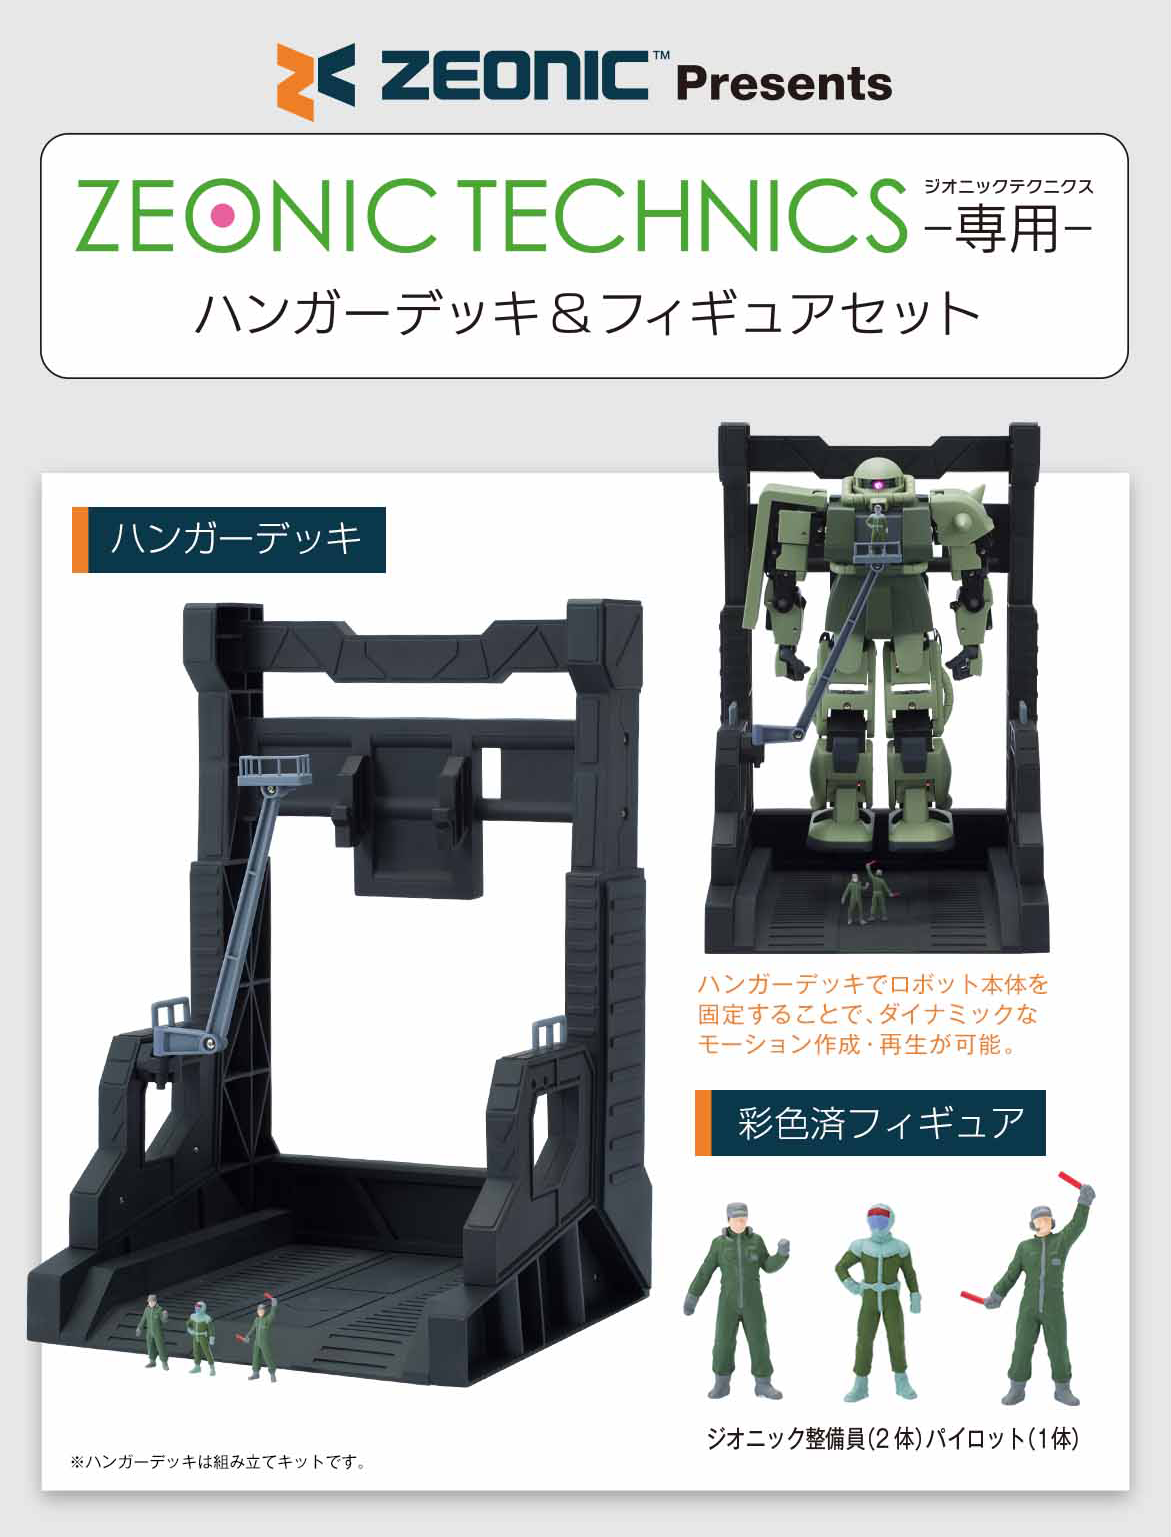 ZEONIC TECHNICS Robotics and Programming Course I